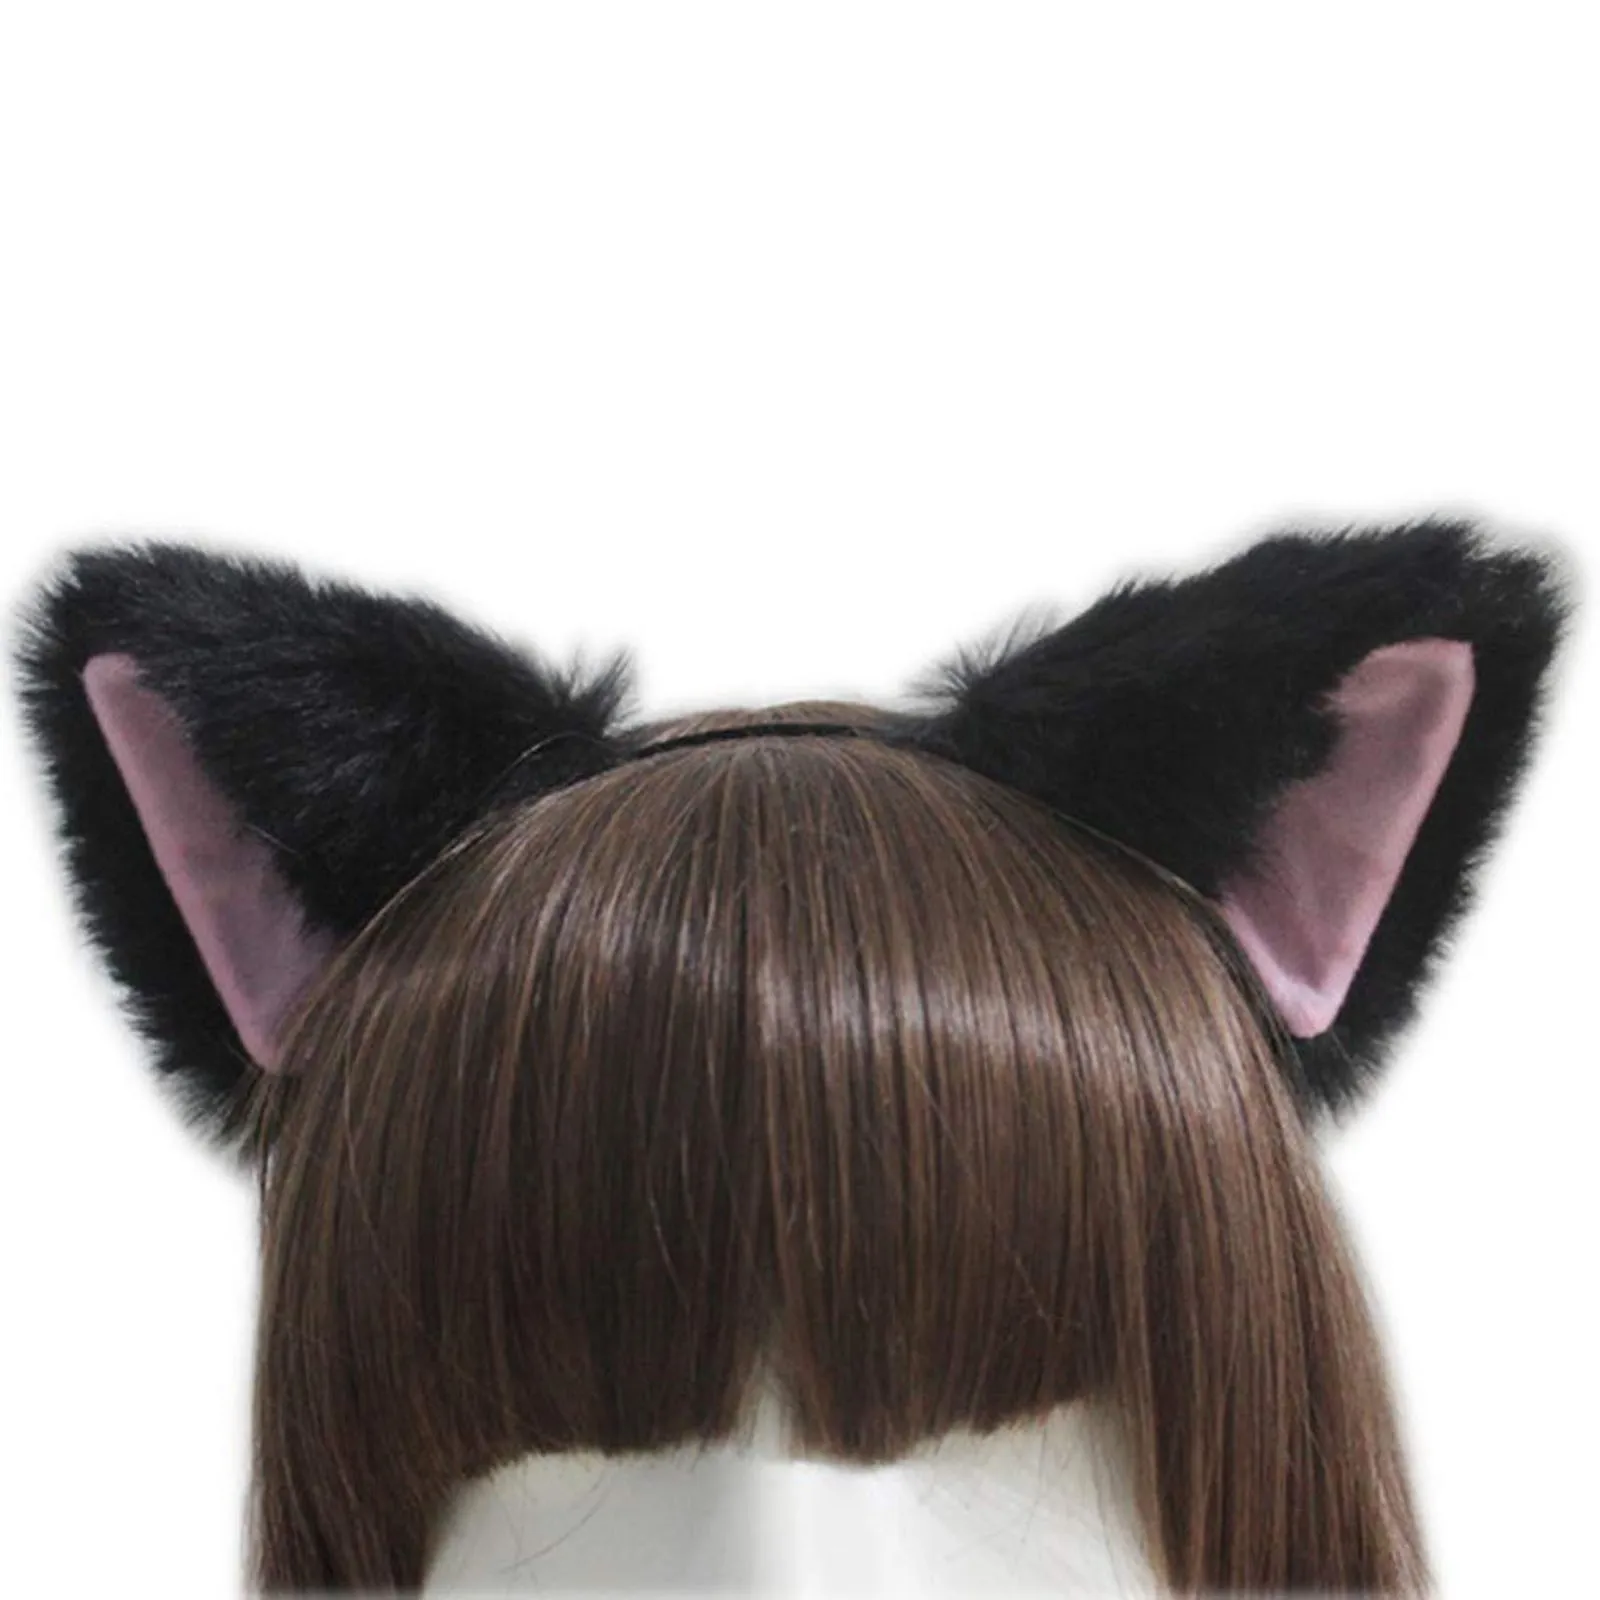 

Cat Long Ears Headband Cute Cosplay Props Black Fluff With Pink Inside Girls Hair Accessoreis Заколка Для Волос